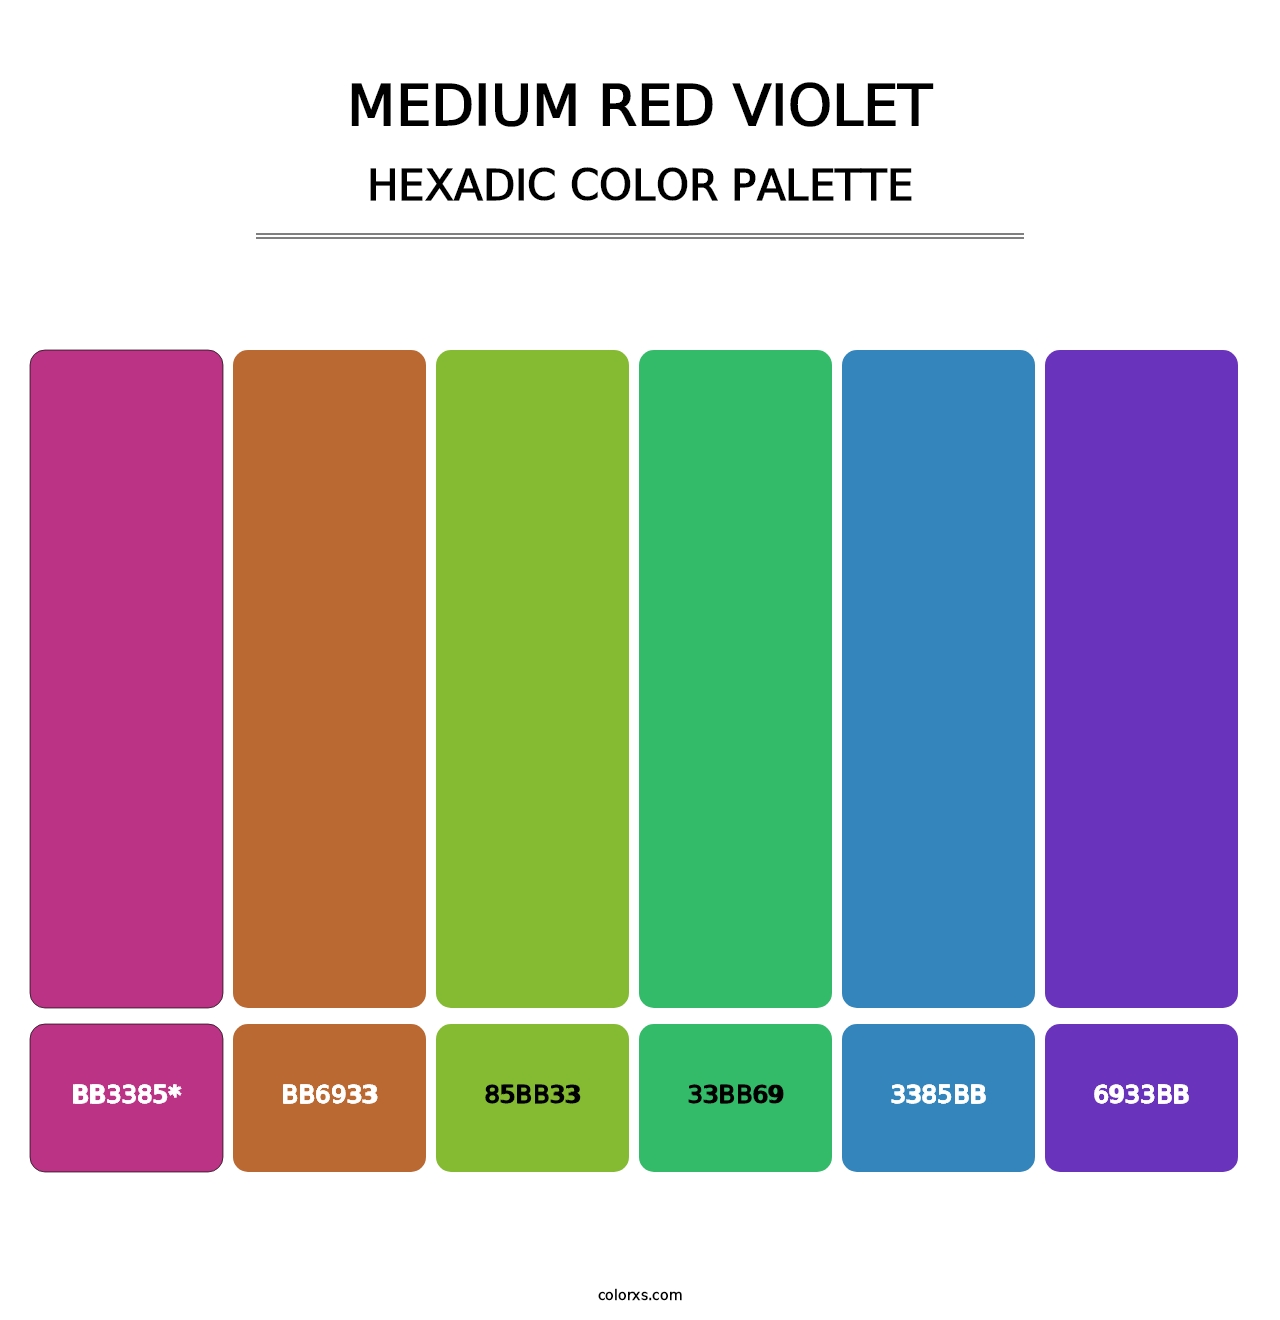 Medium Red Violet - Hexadic Color Palette